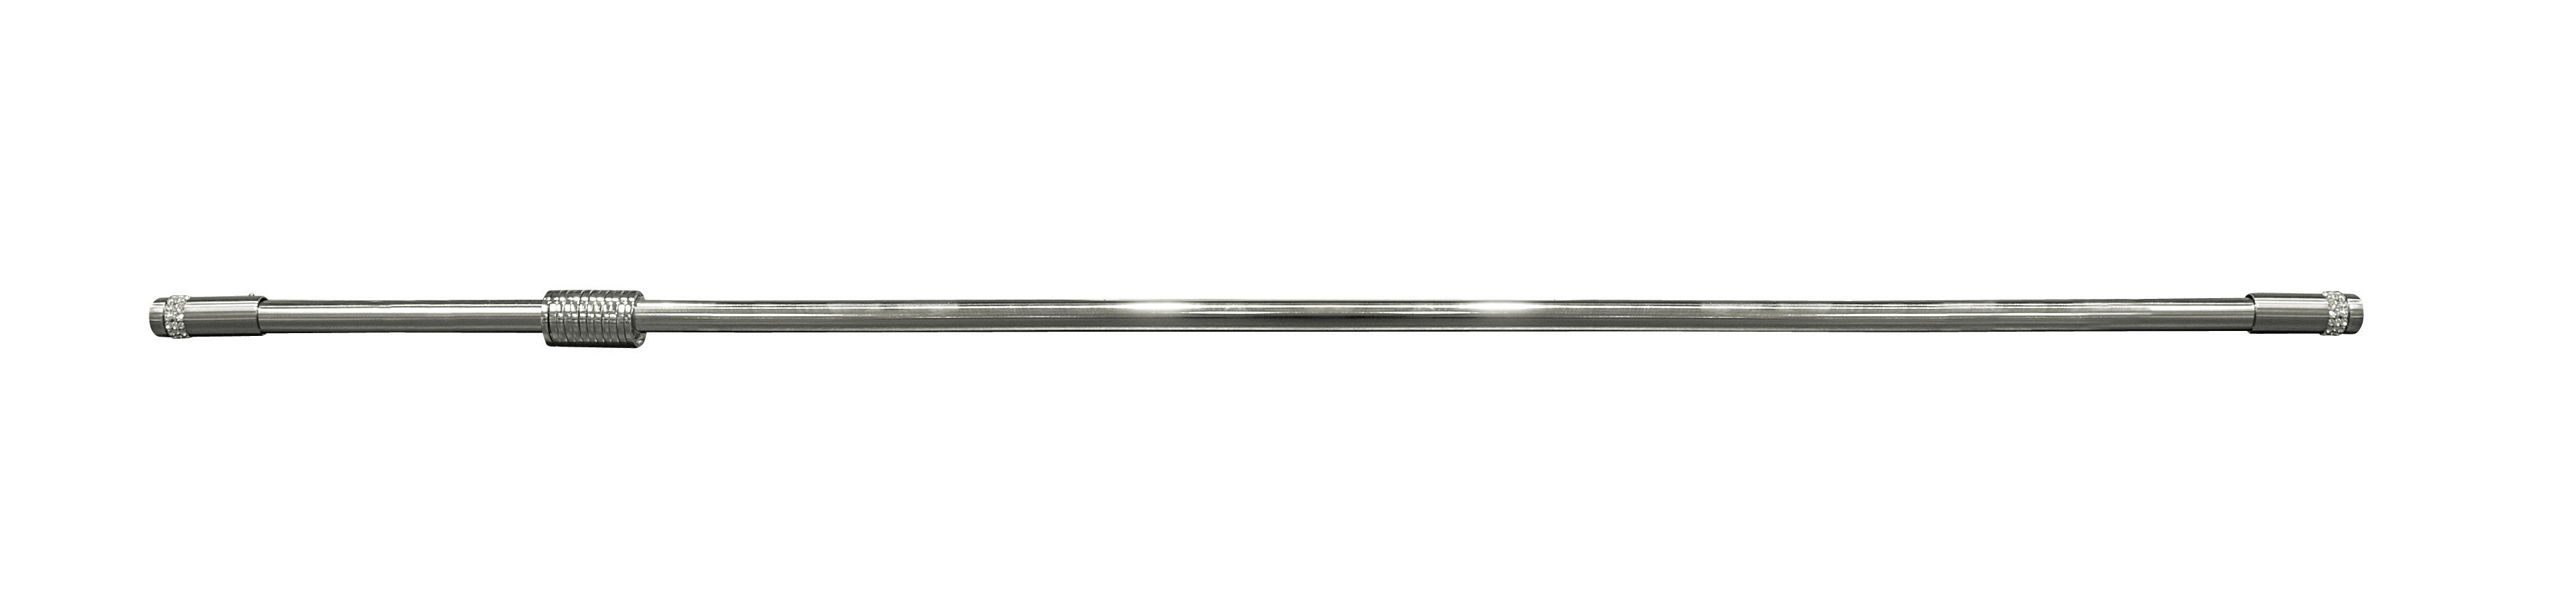 SET GARNIŠNI srebrna, metal - srebrna, Dizajnerski, metal (200cm) - Homeware